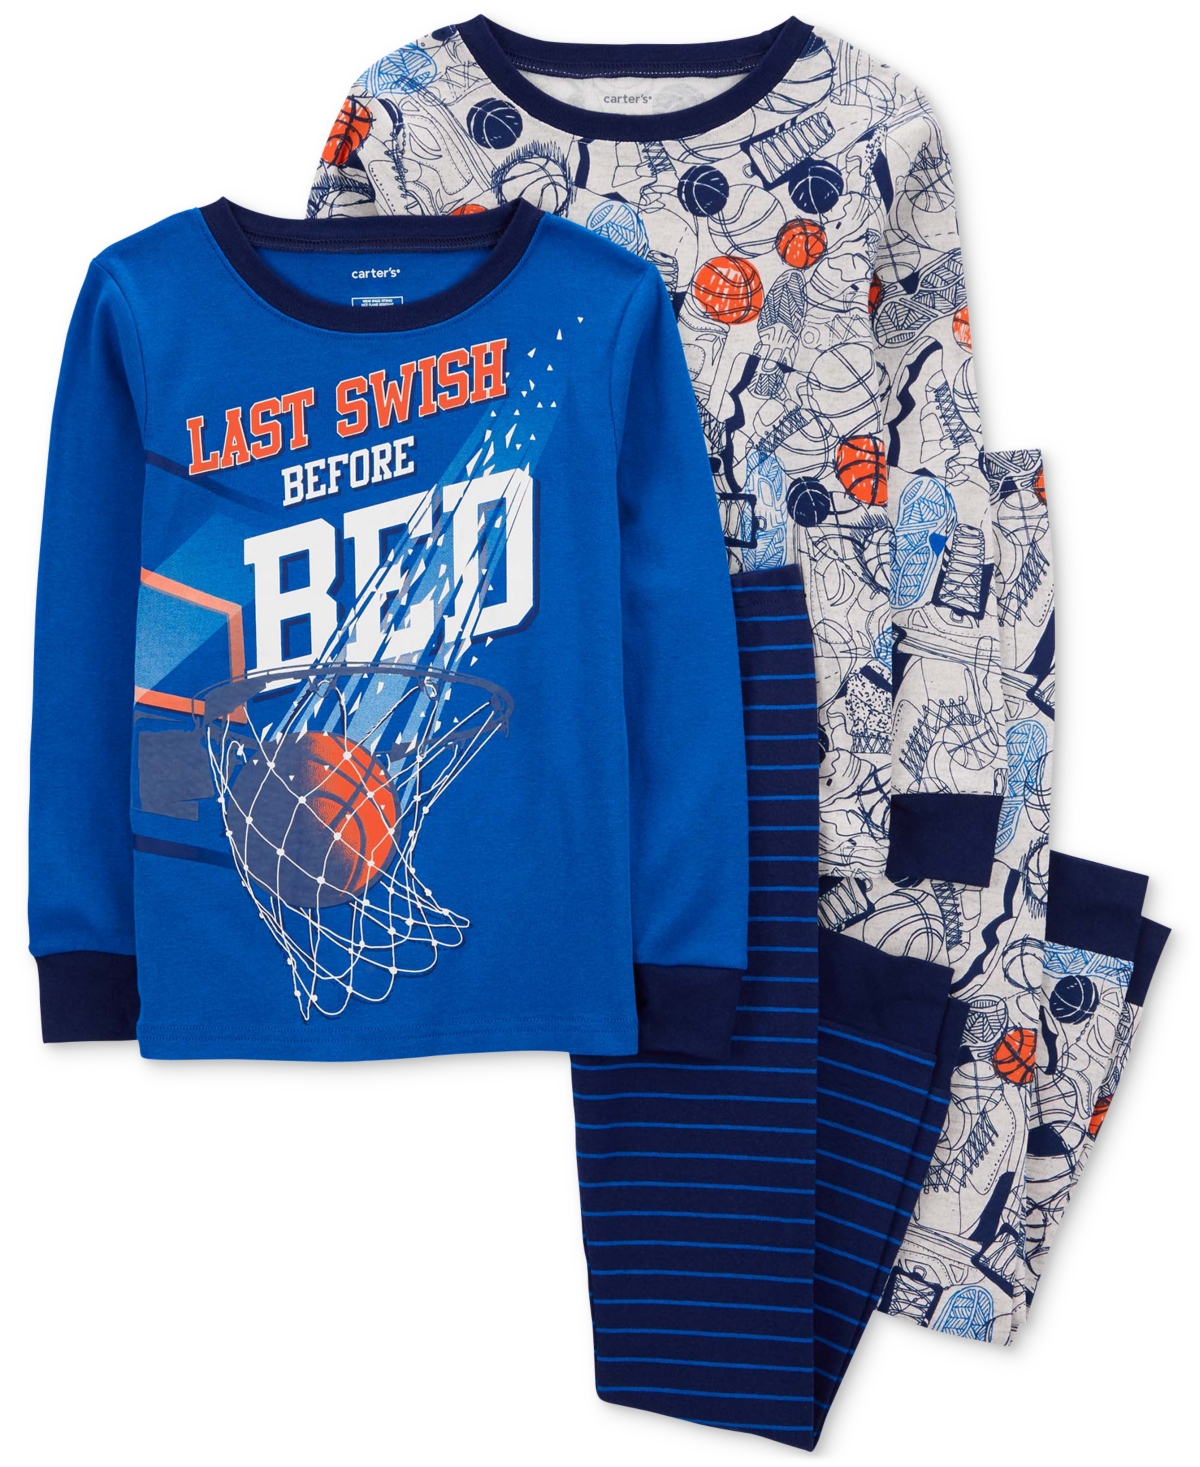 Carter's Kids' Big Boys Basketball Swish Pajamas, 4 Piece Set In Blue